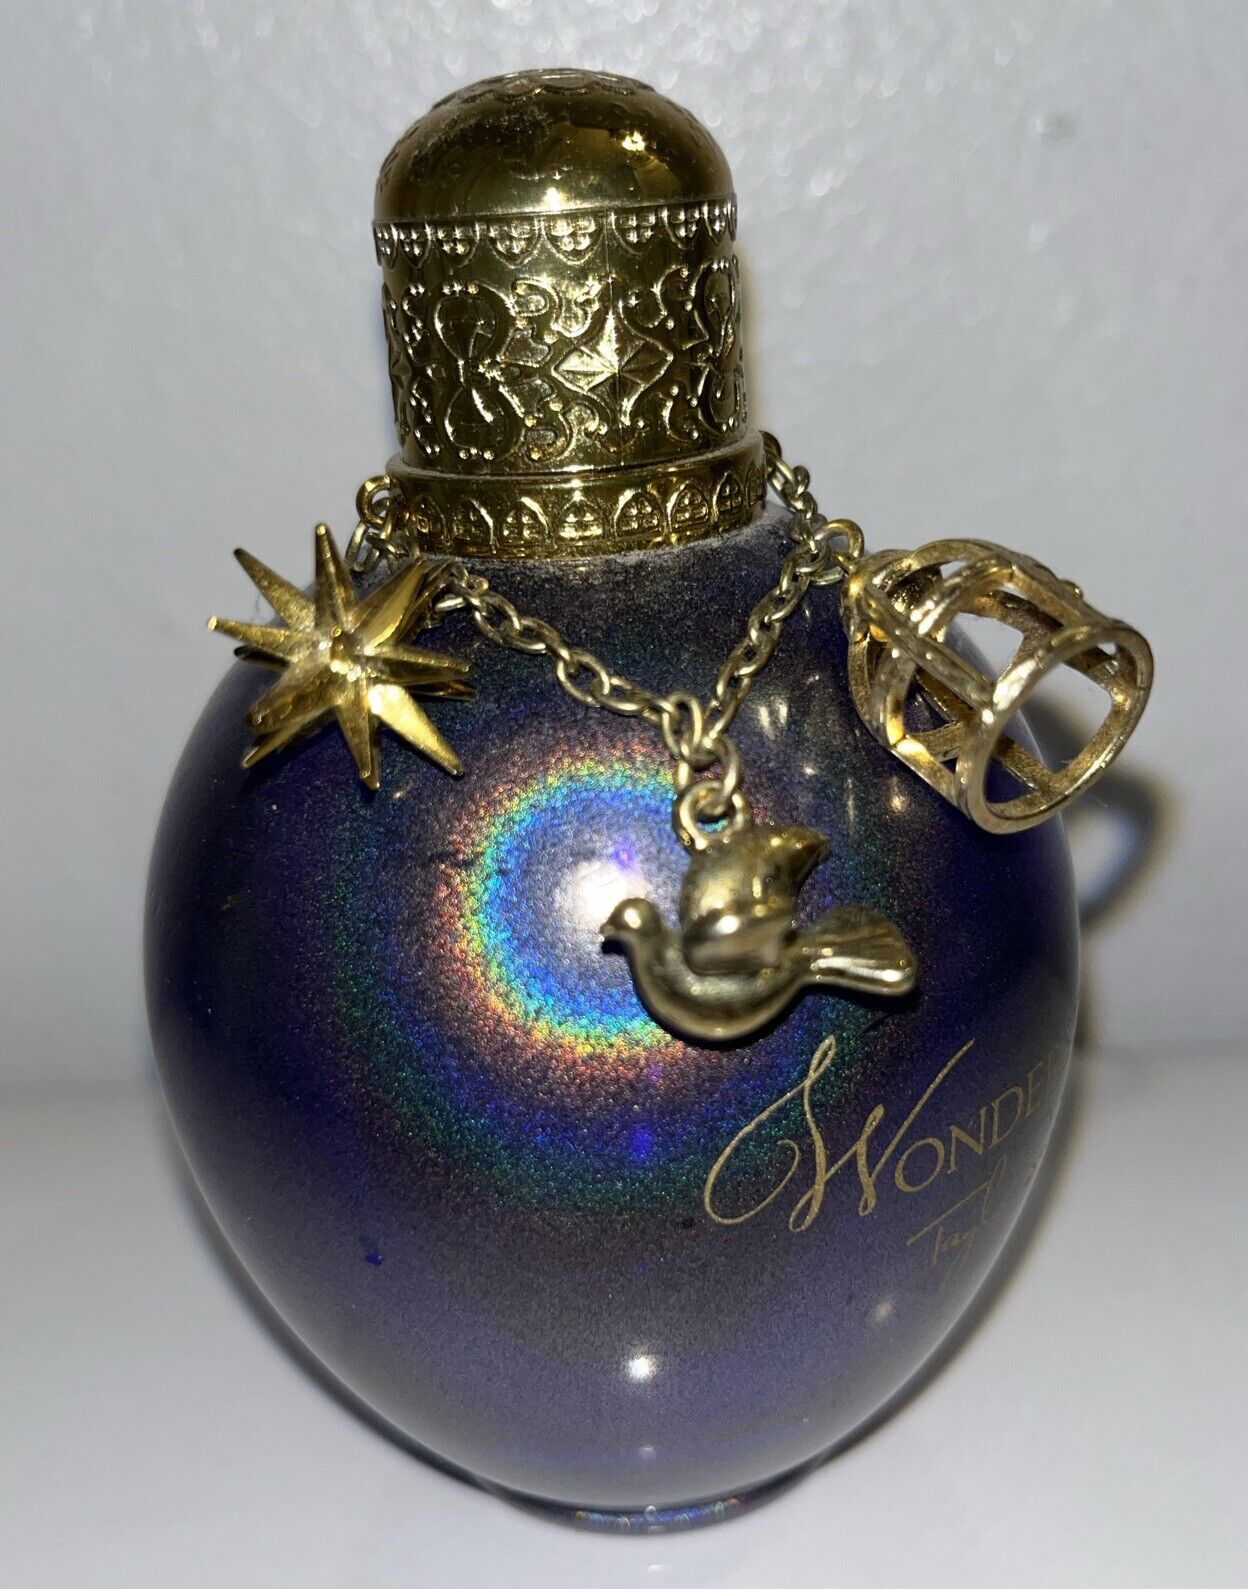 Taylor Swift Wonderstruck Perfume Bottle EMPTY 3.4 Fl. Oz. with Charms Cap Lid